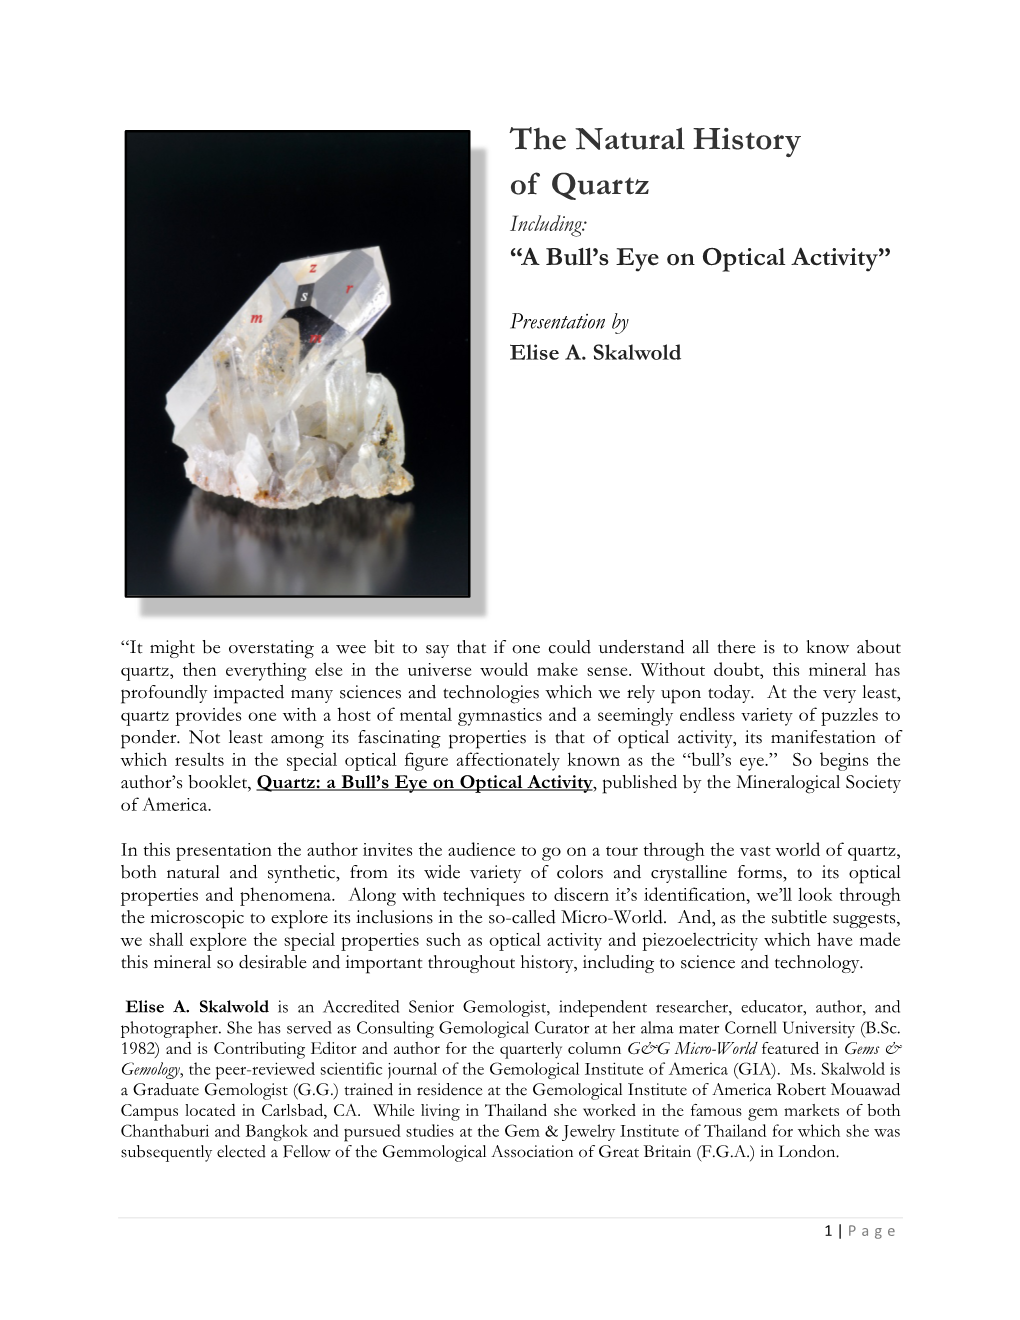 Presentation: the Natural History of Quartz